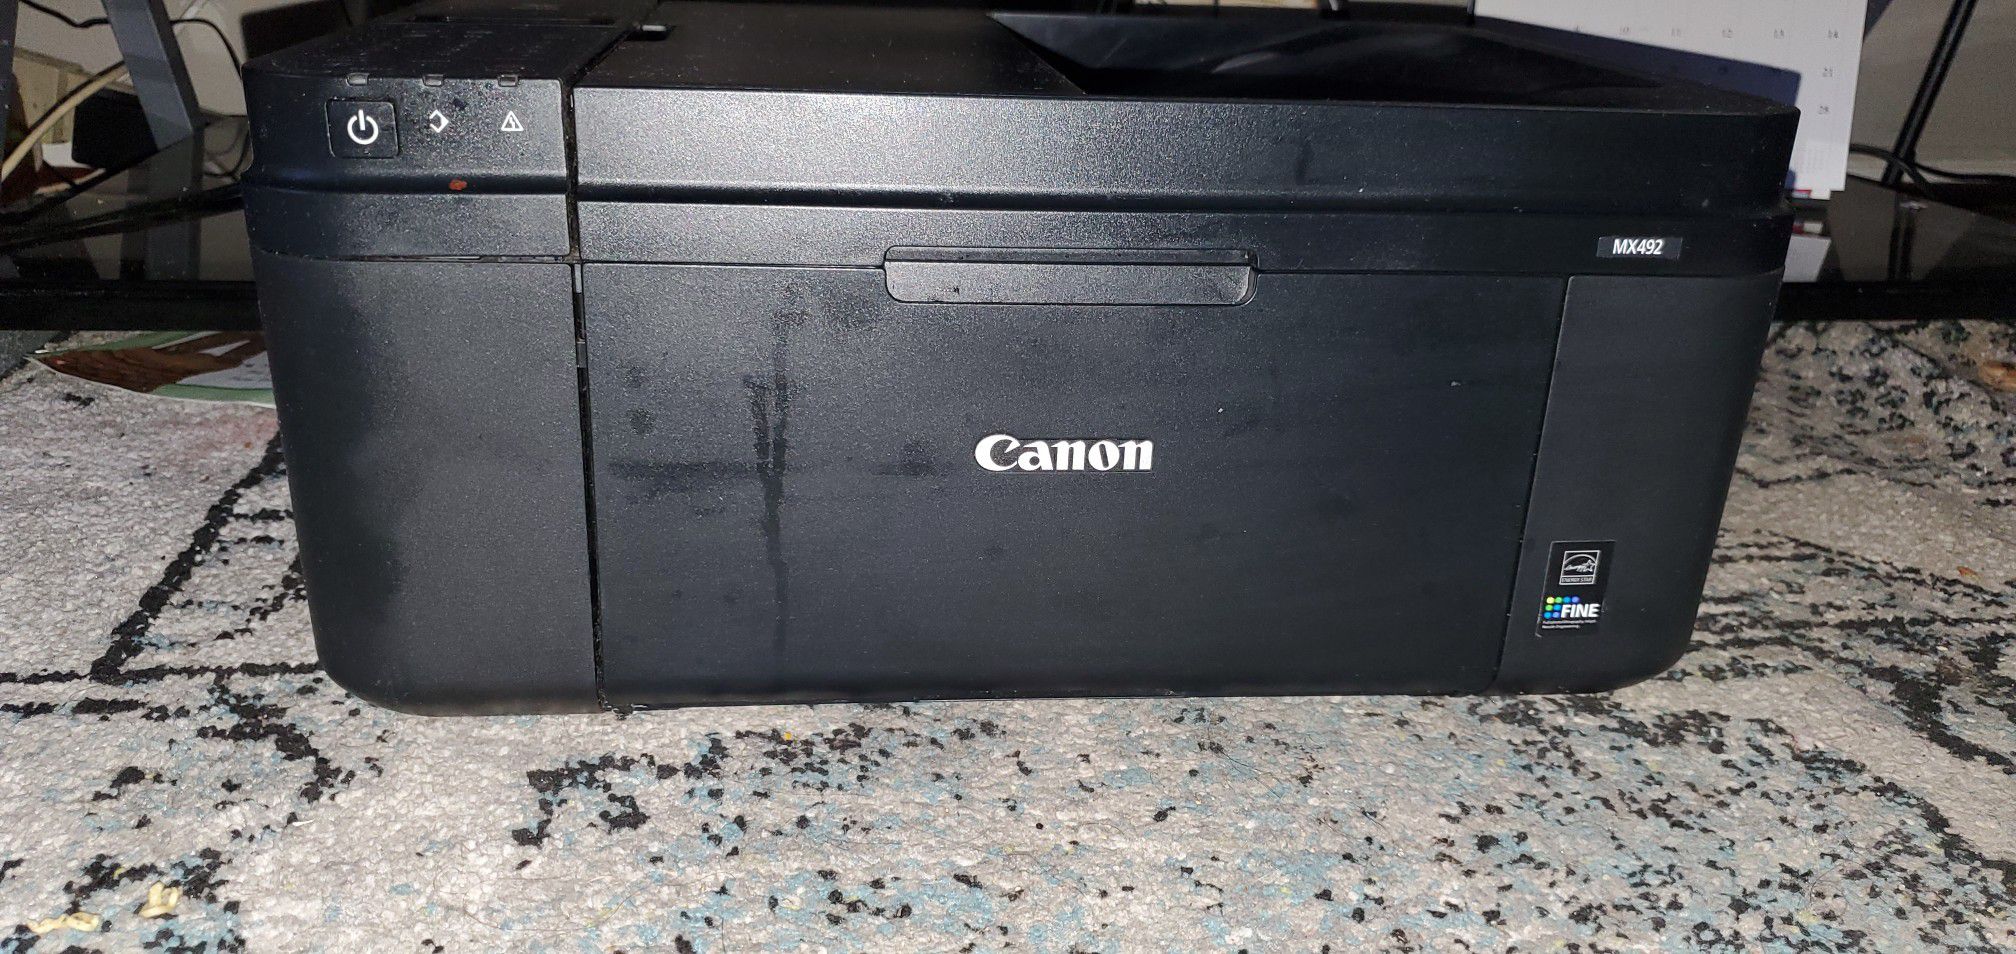 Canon Mx490 multitasker printer